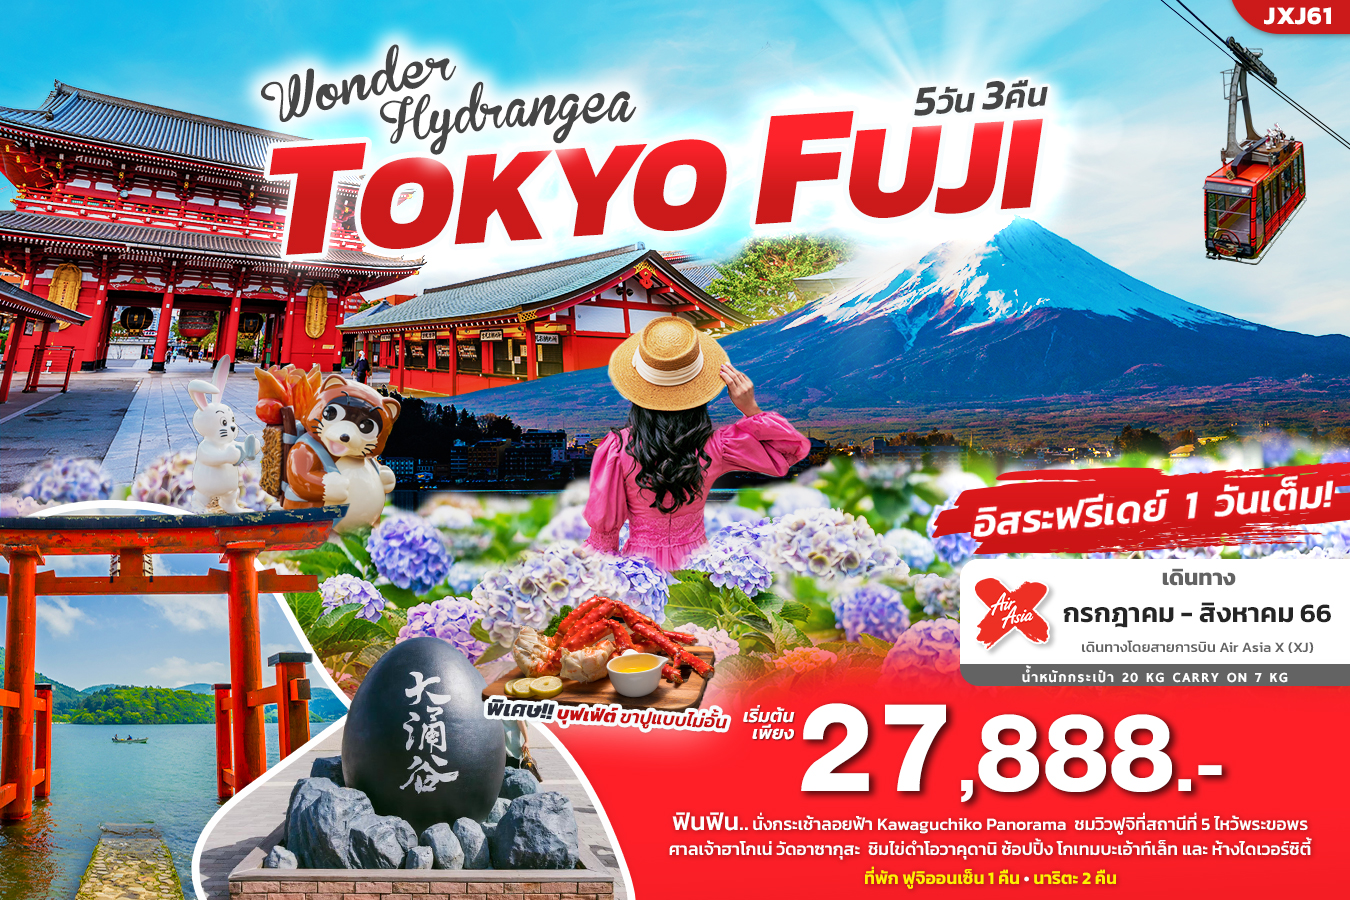 WONDER Hydrangea TOKYO FUJI โตเกียว-ฟูจิ ทัวร์ญี่ปุ่นน 5วัน3คืน